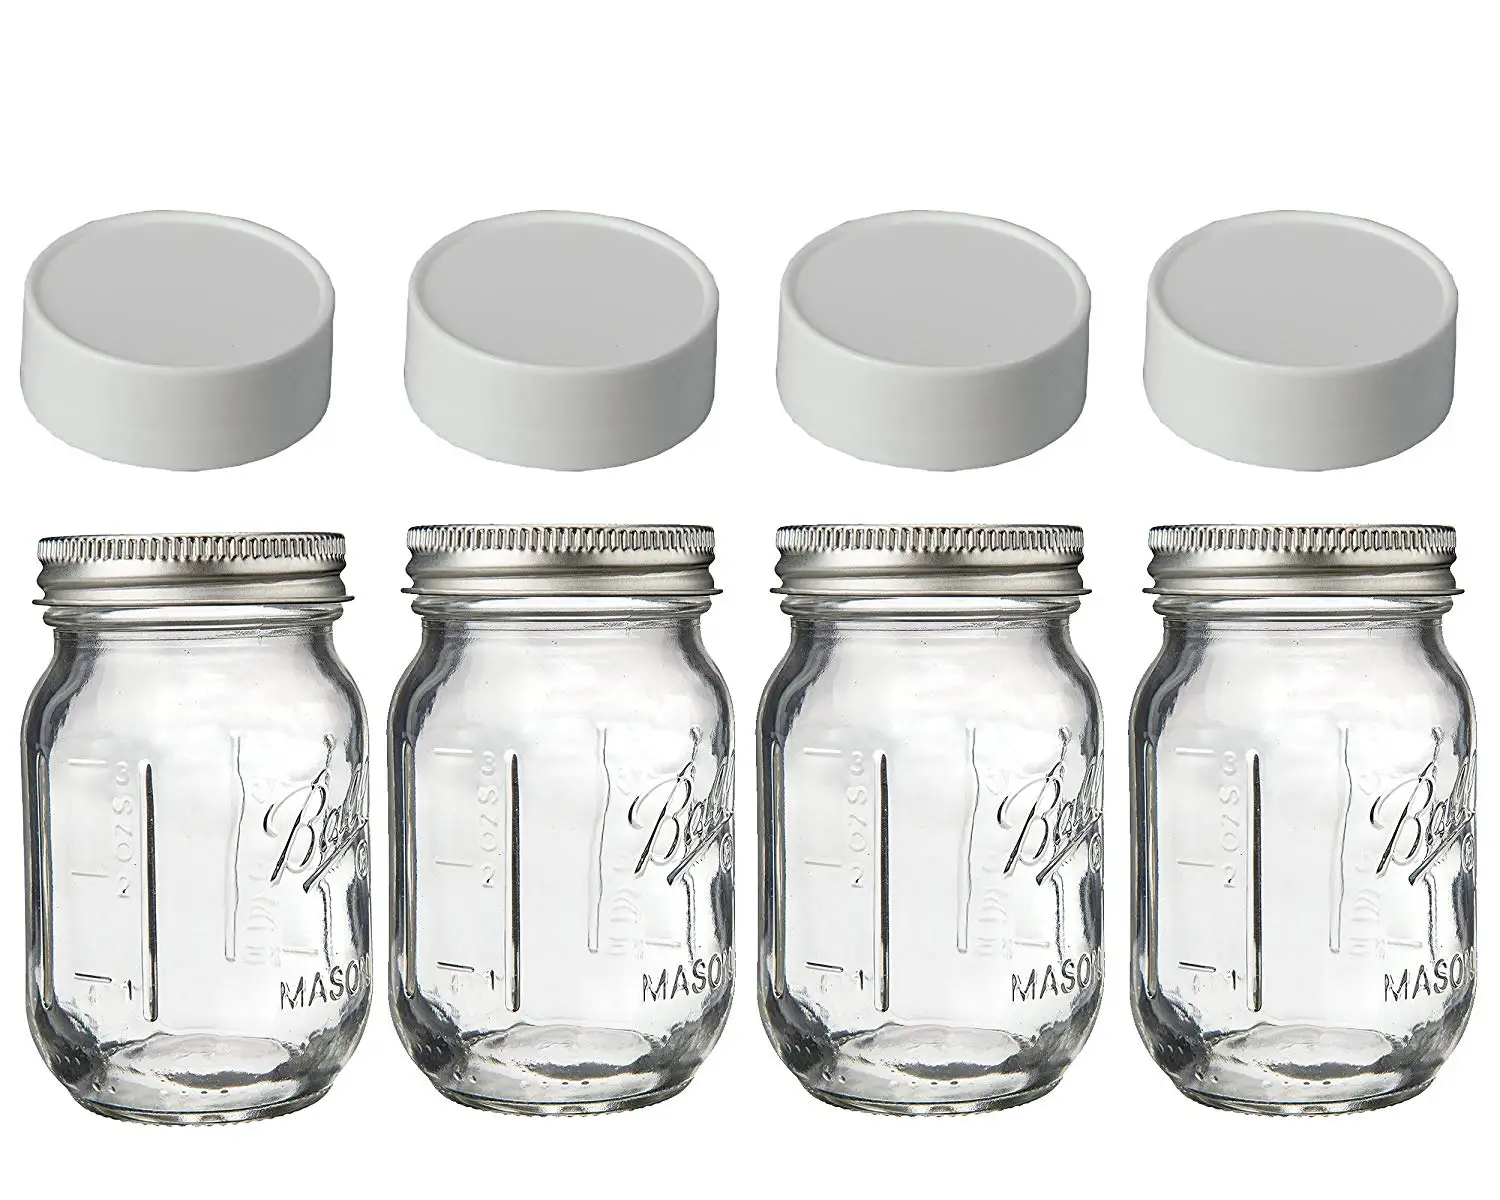 3 oz spice jars wholesale